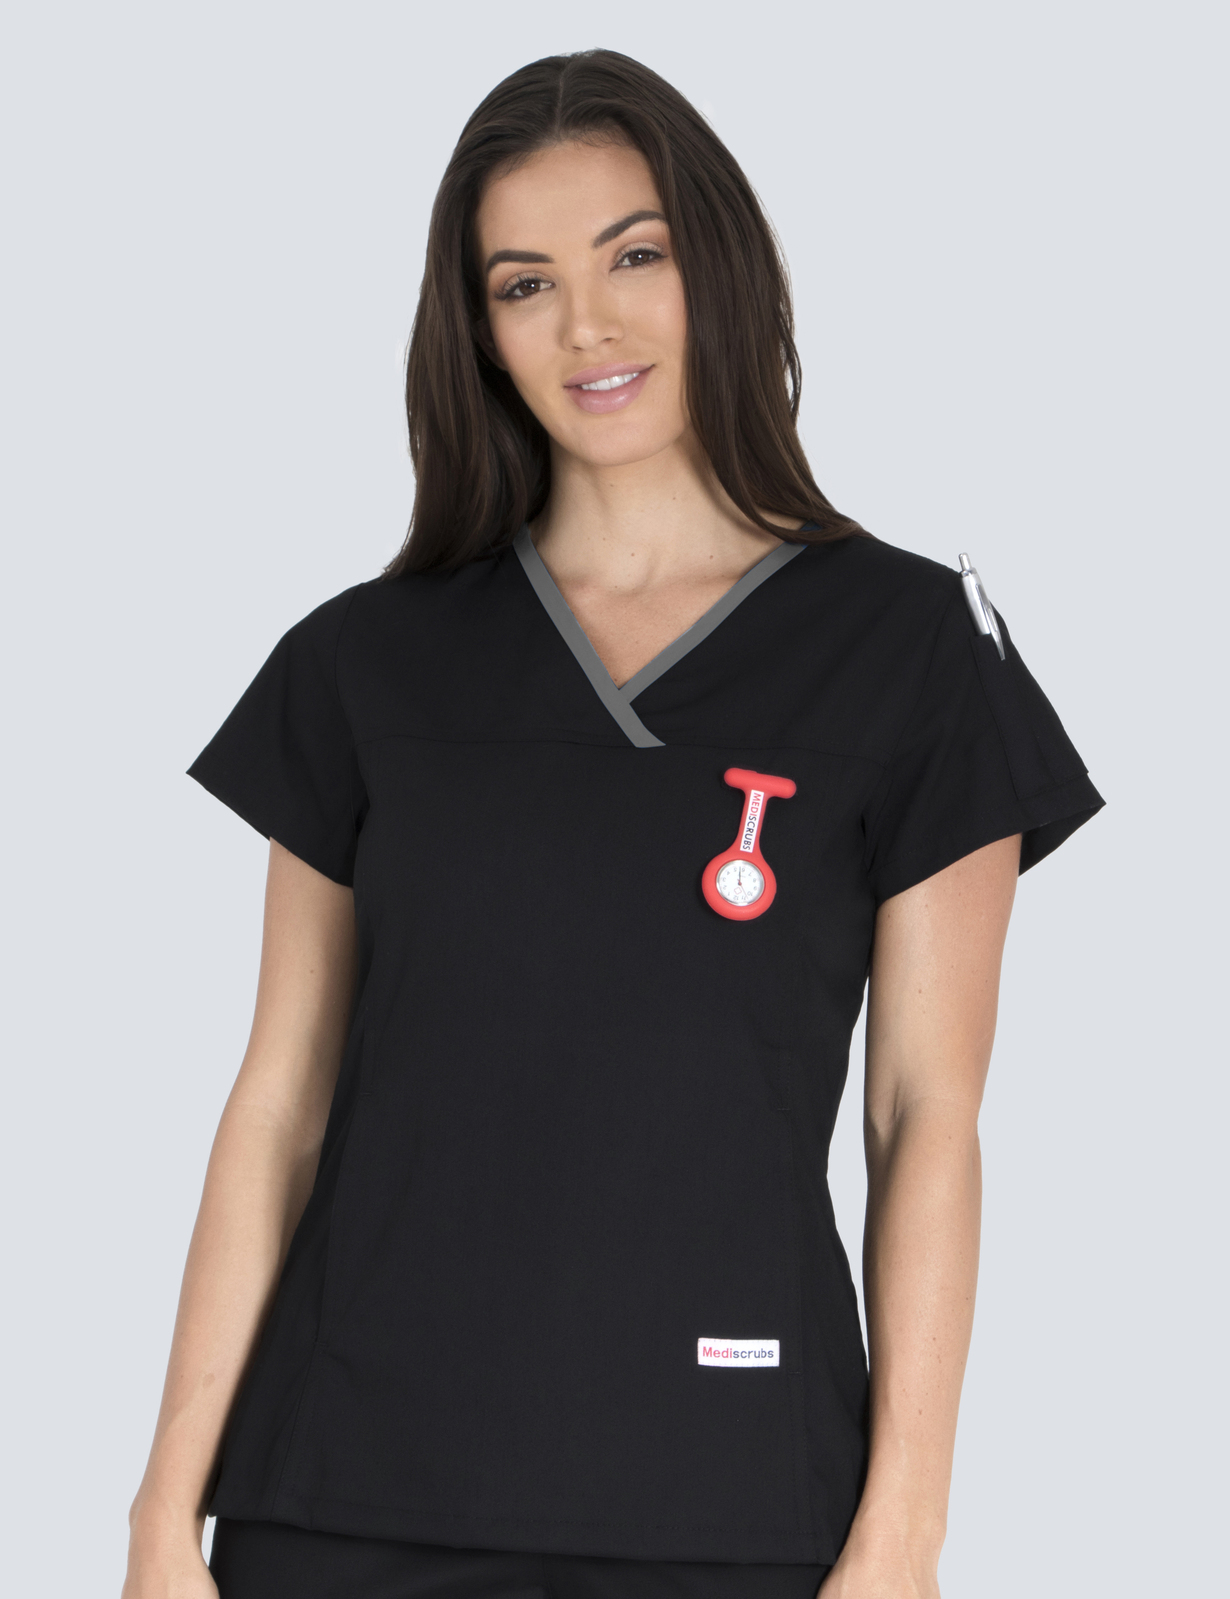 Launceston General Hospital - MI - Radiographer- With Trim - Women's Fit X 2 Logos Bundle